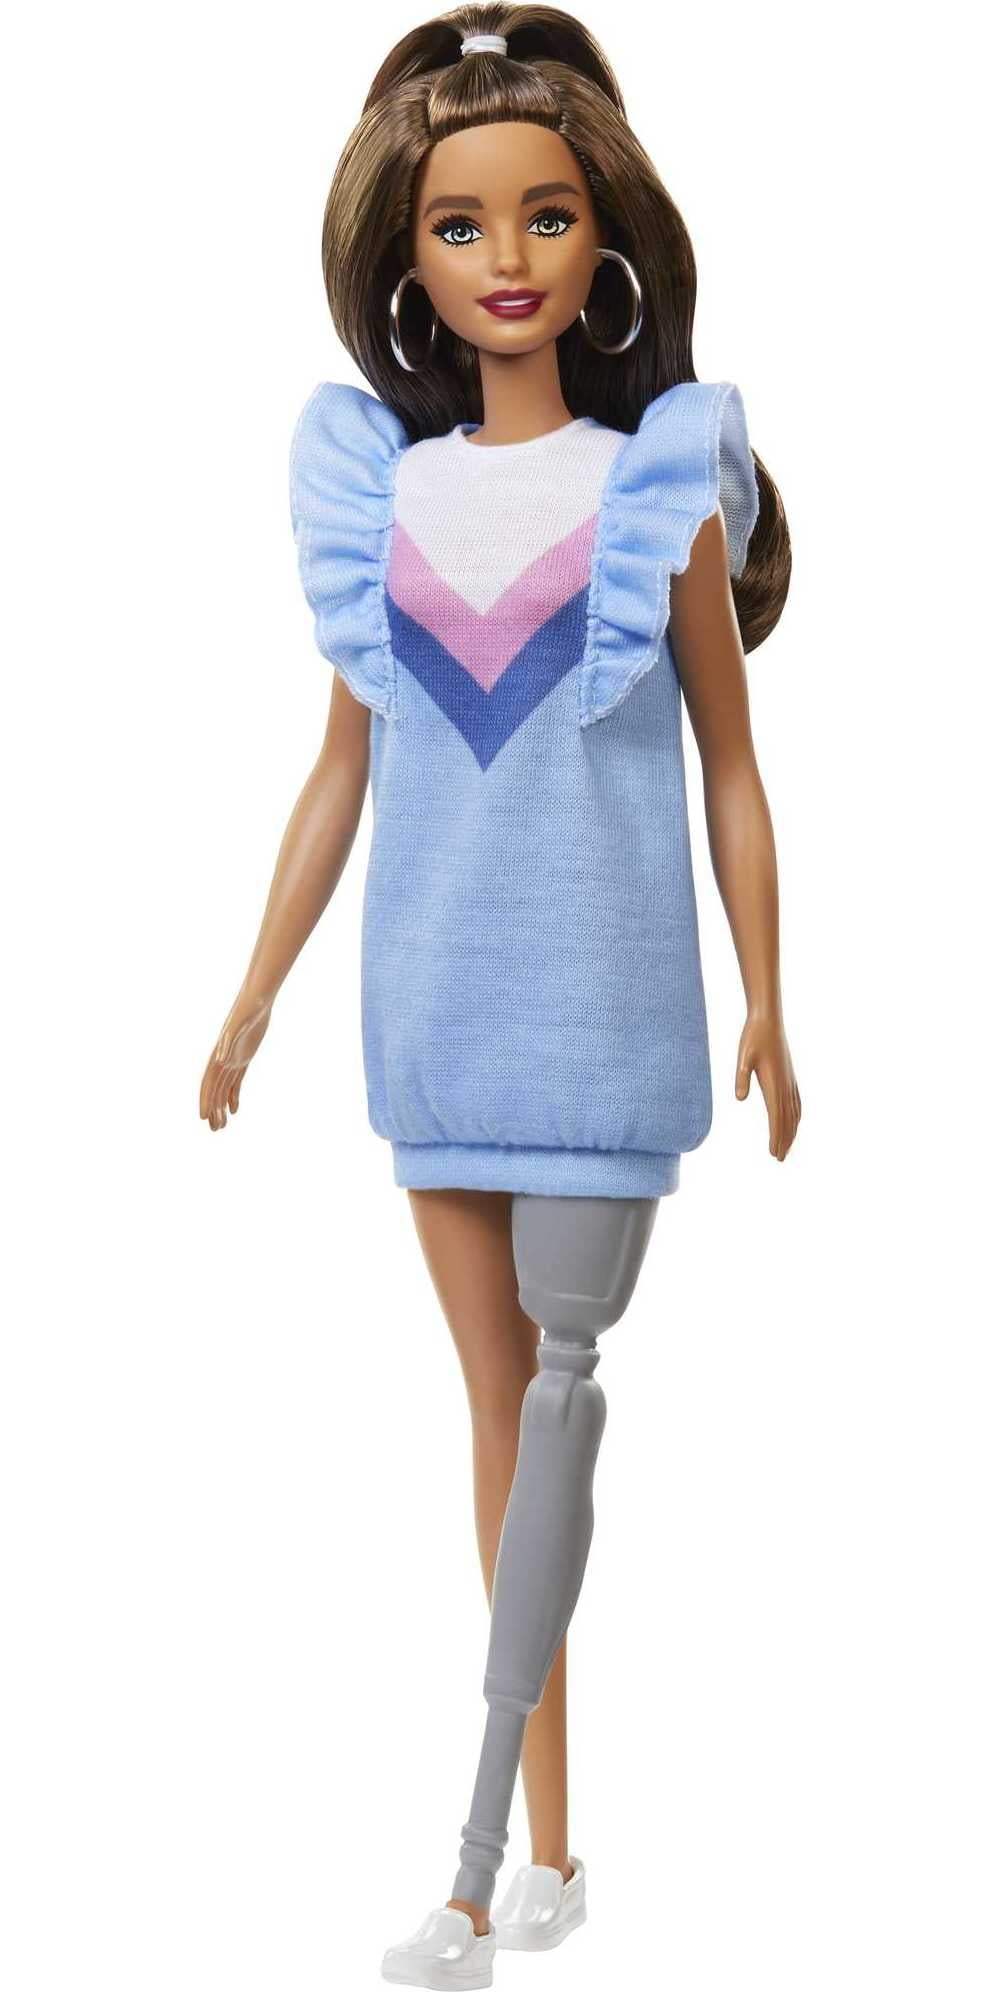 Barbie Fashionistas Blue and White Check Overalls Dress Curvy Tall Regular 